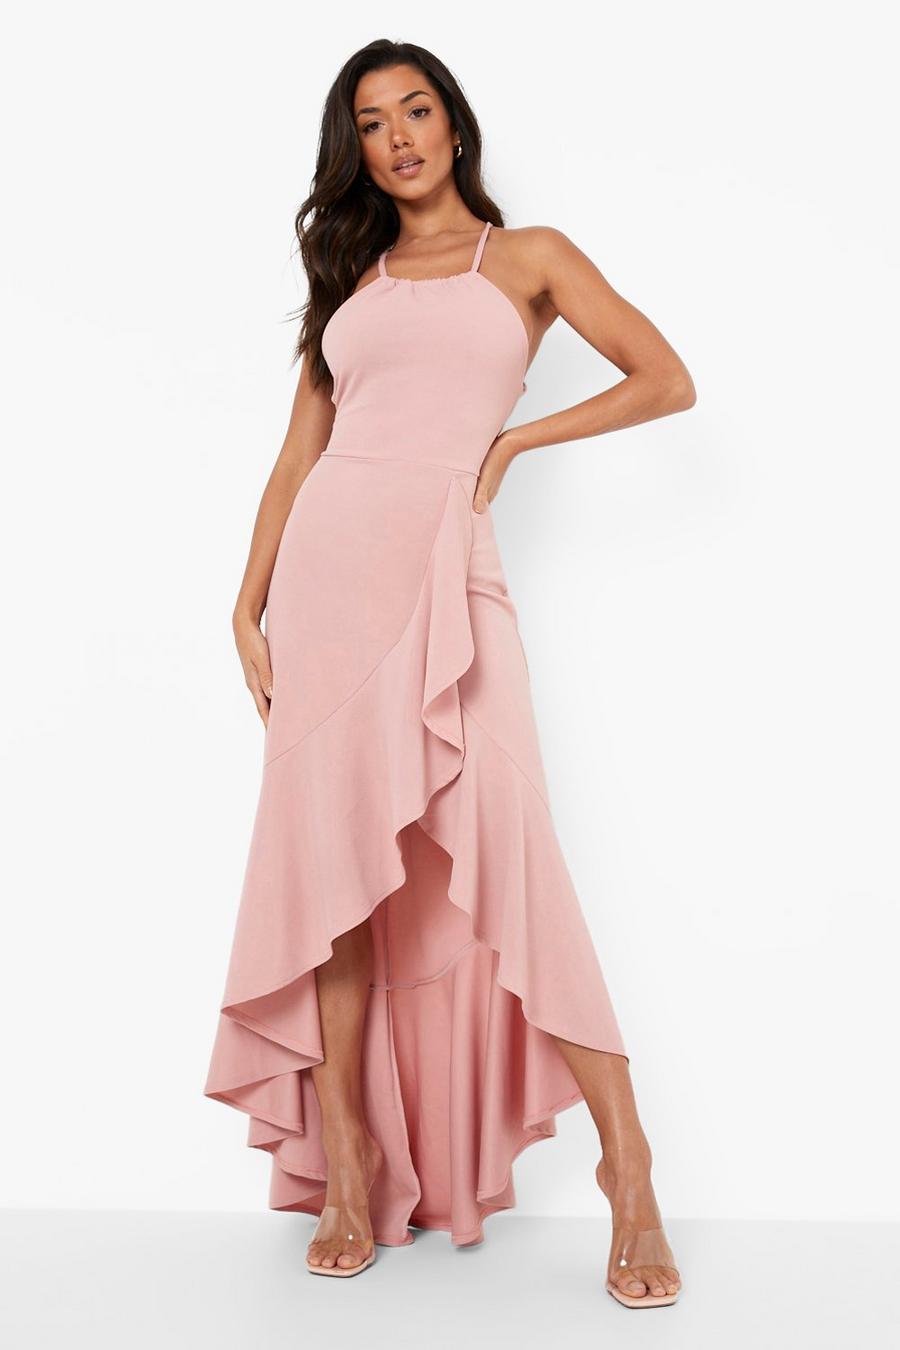 Blush pink Frill Hem Lace Back Detail Dress